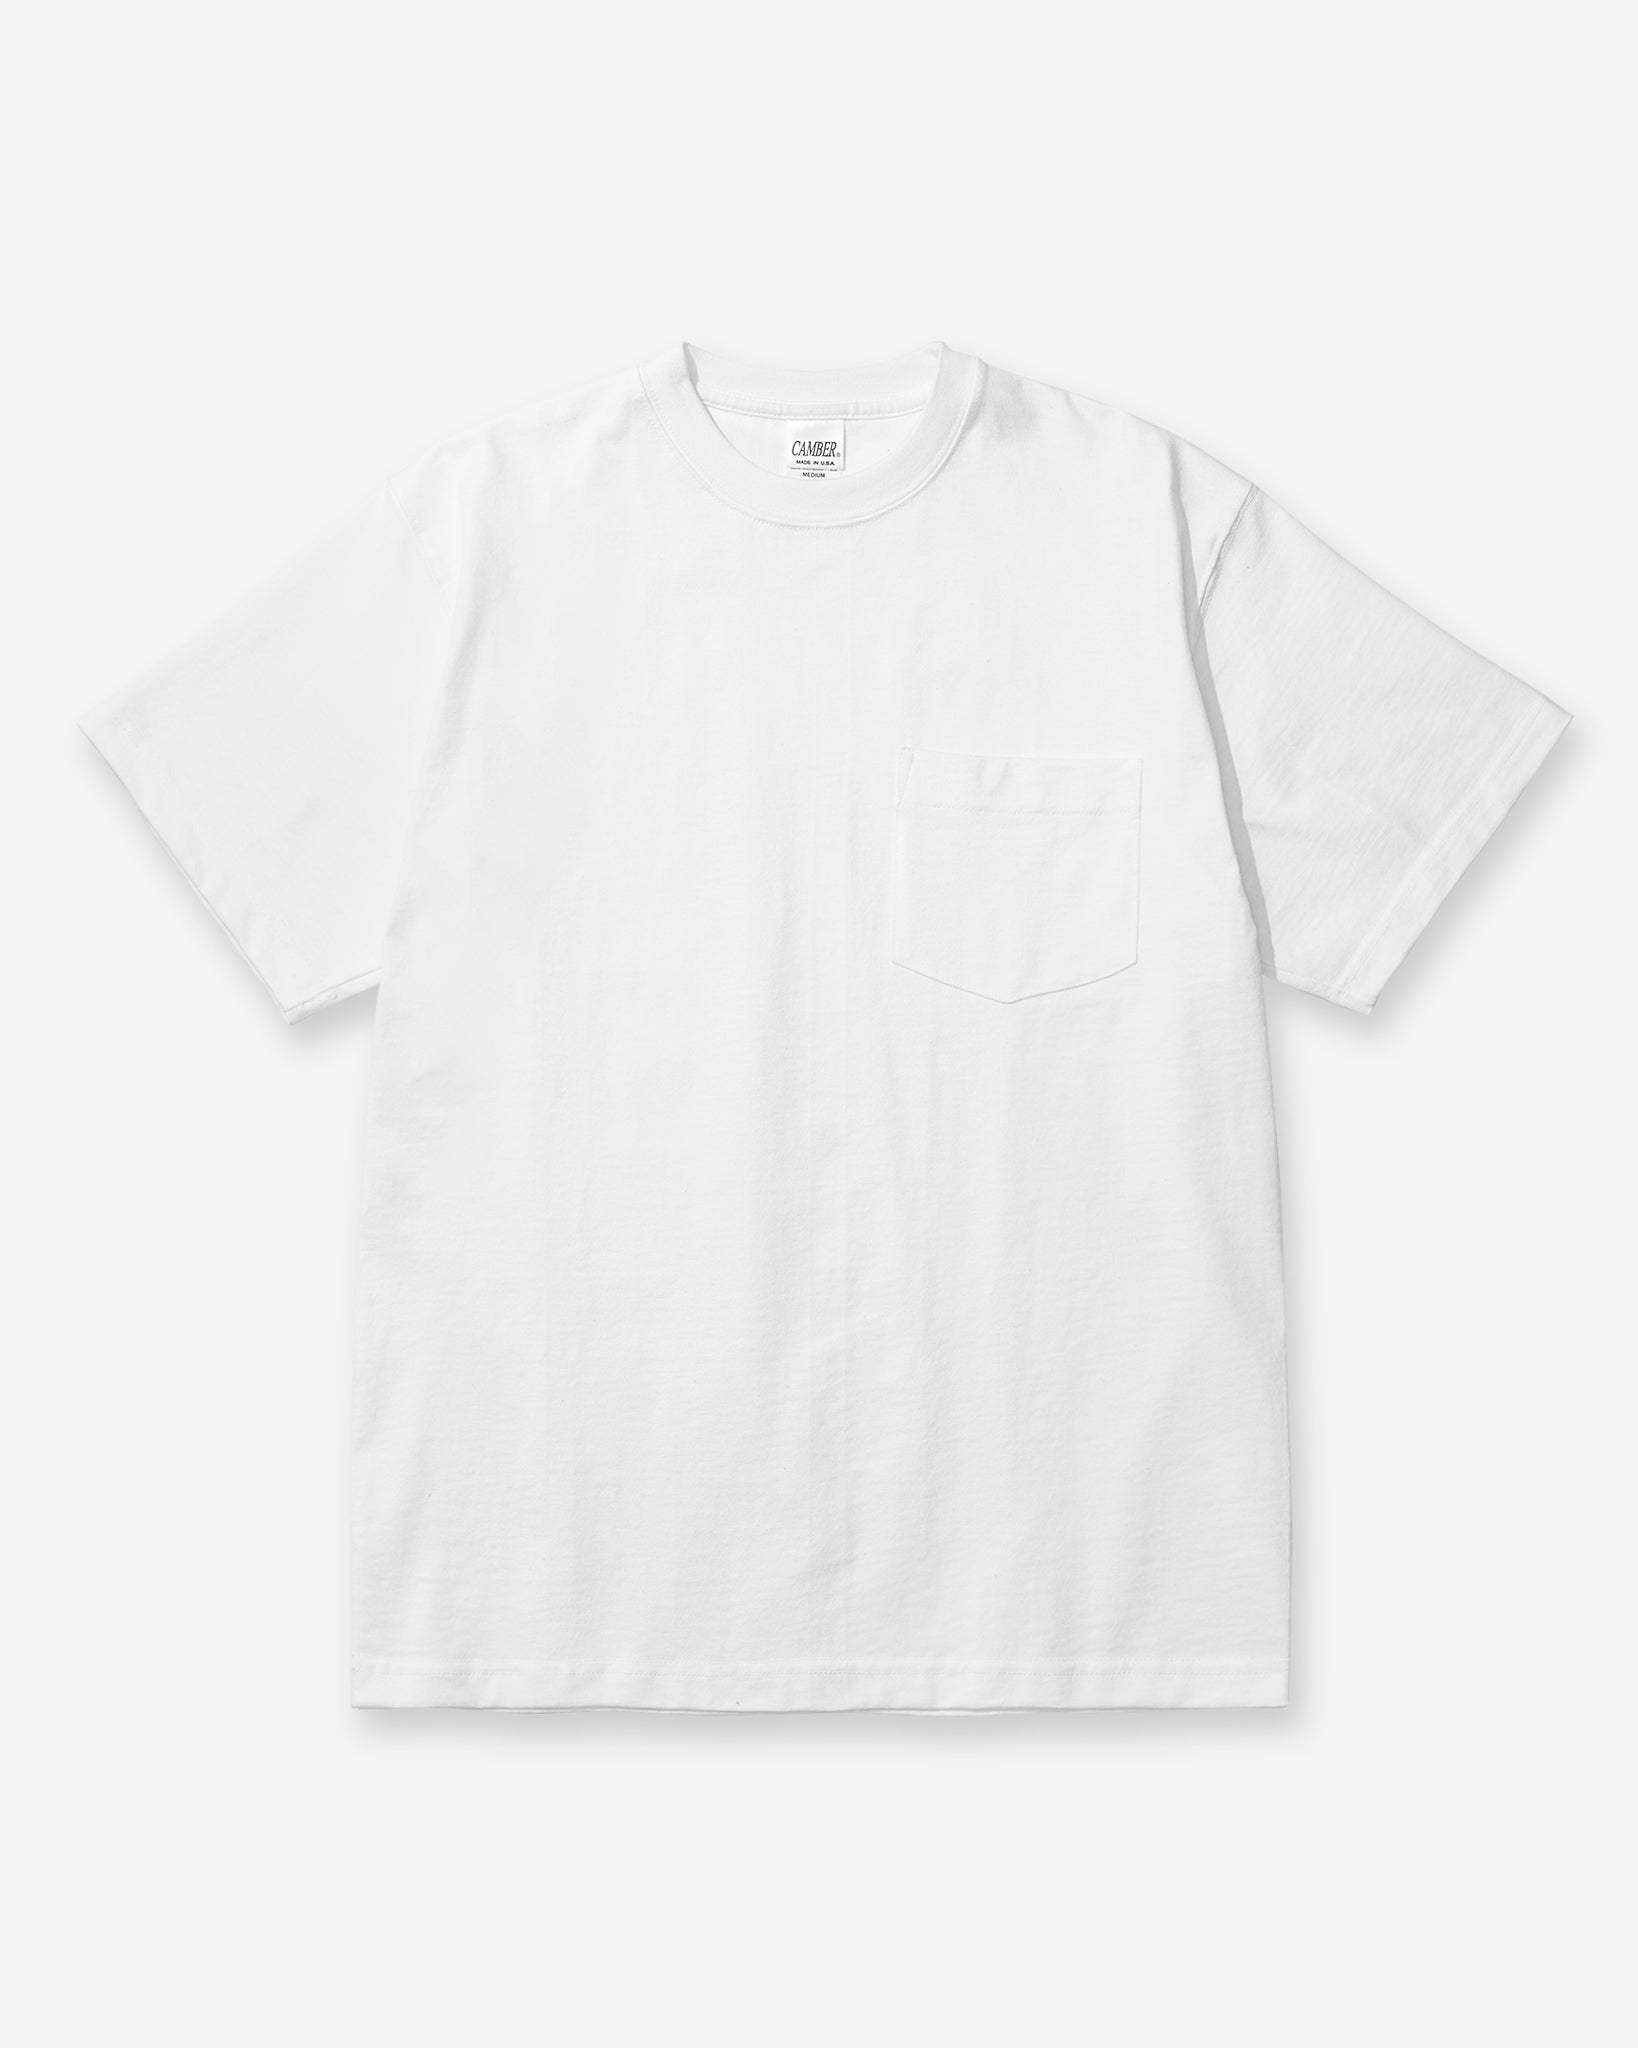 MAX-WEIGHT® Pocket T-Shirt - White